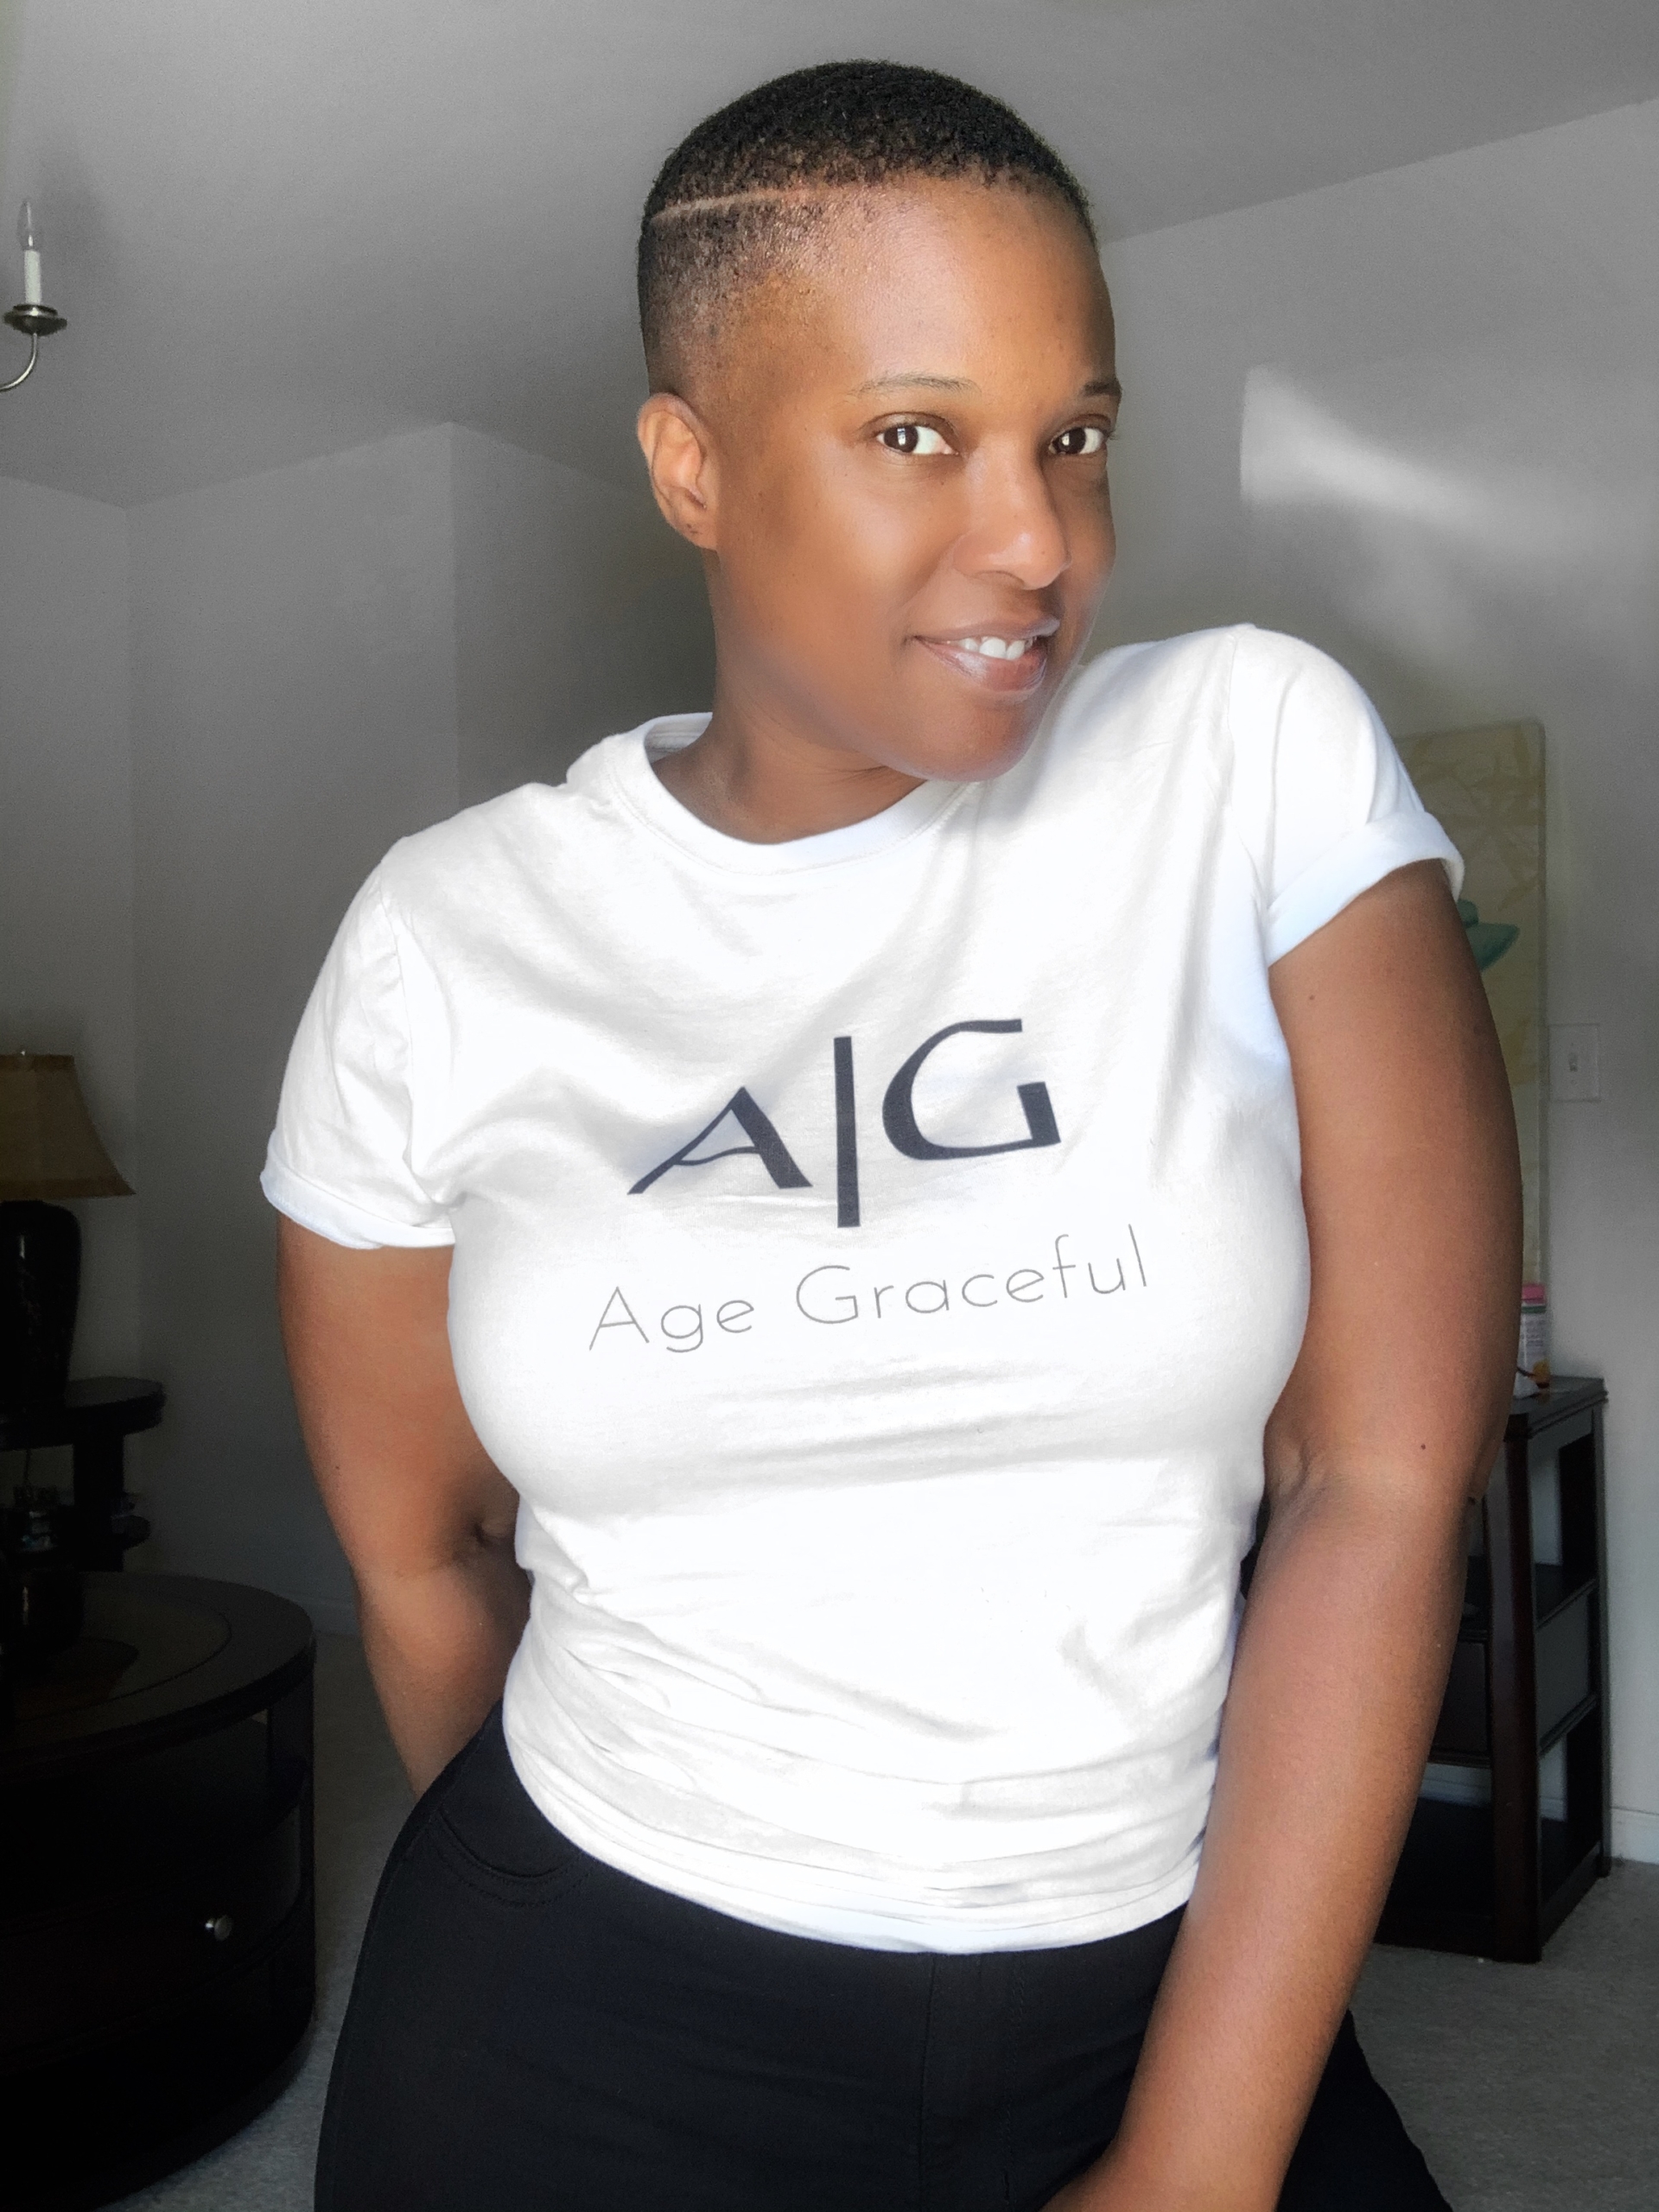 Age Graceful